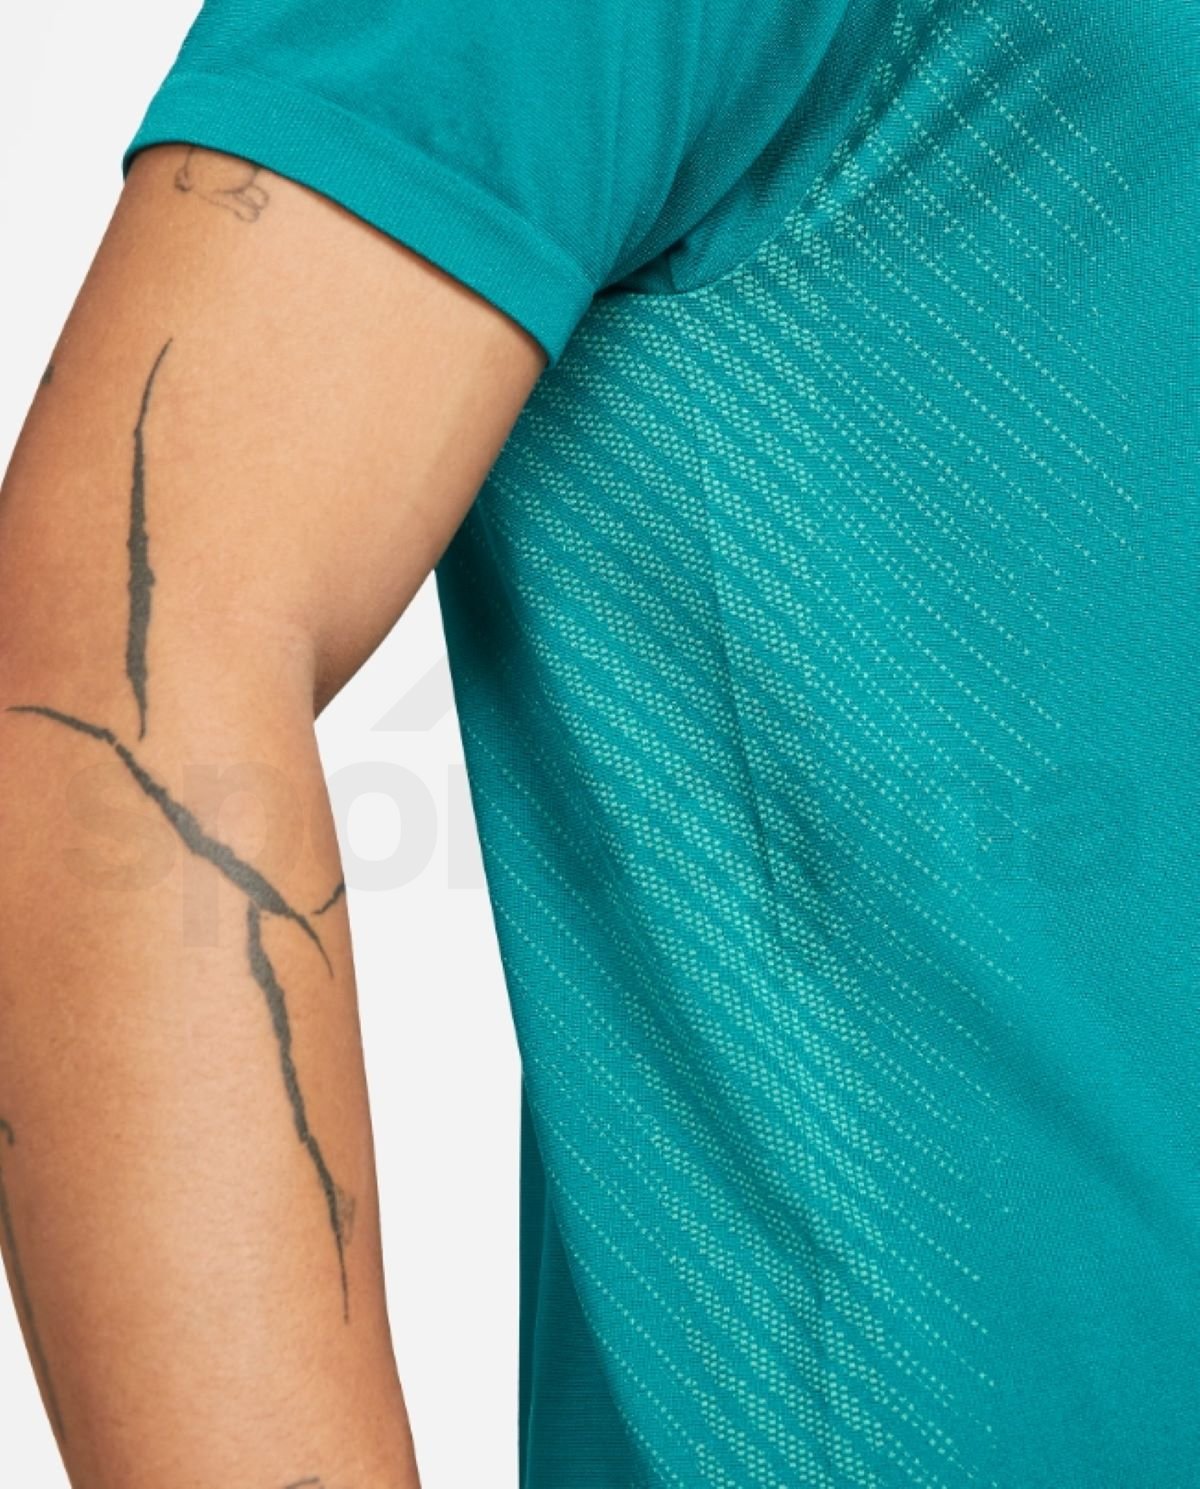 Tričko Nike Dri-FIT SEAMLESS M - tyrkysová